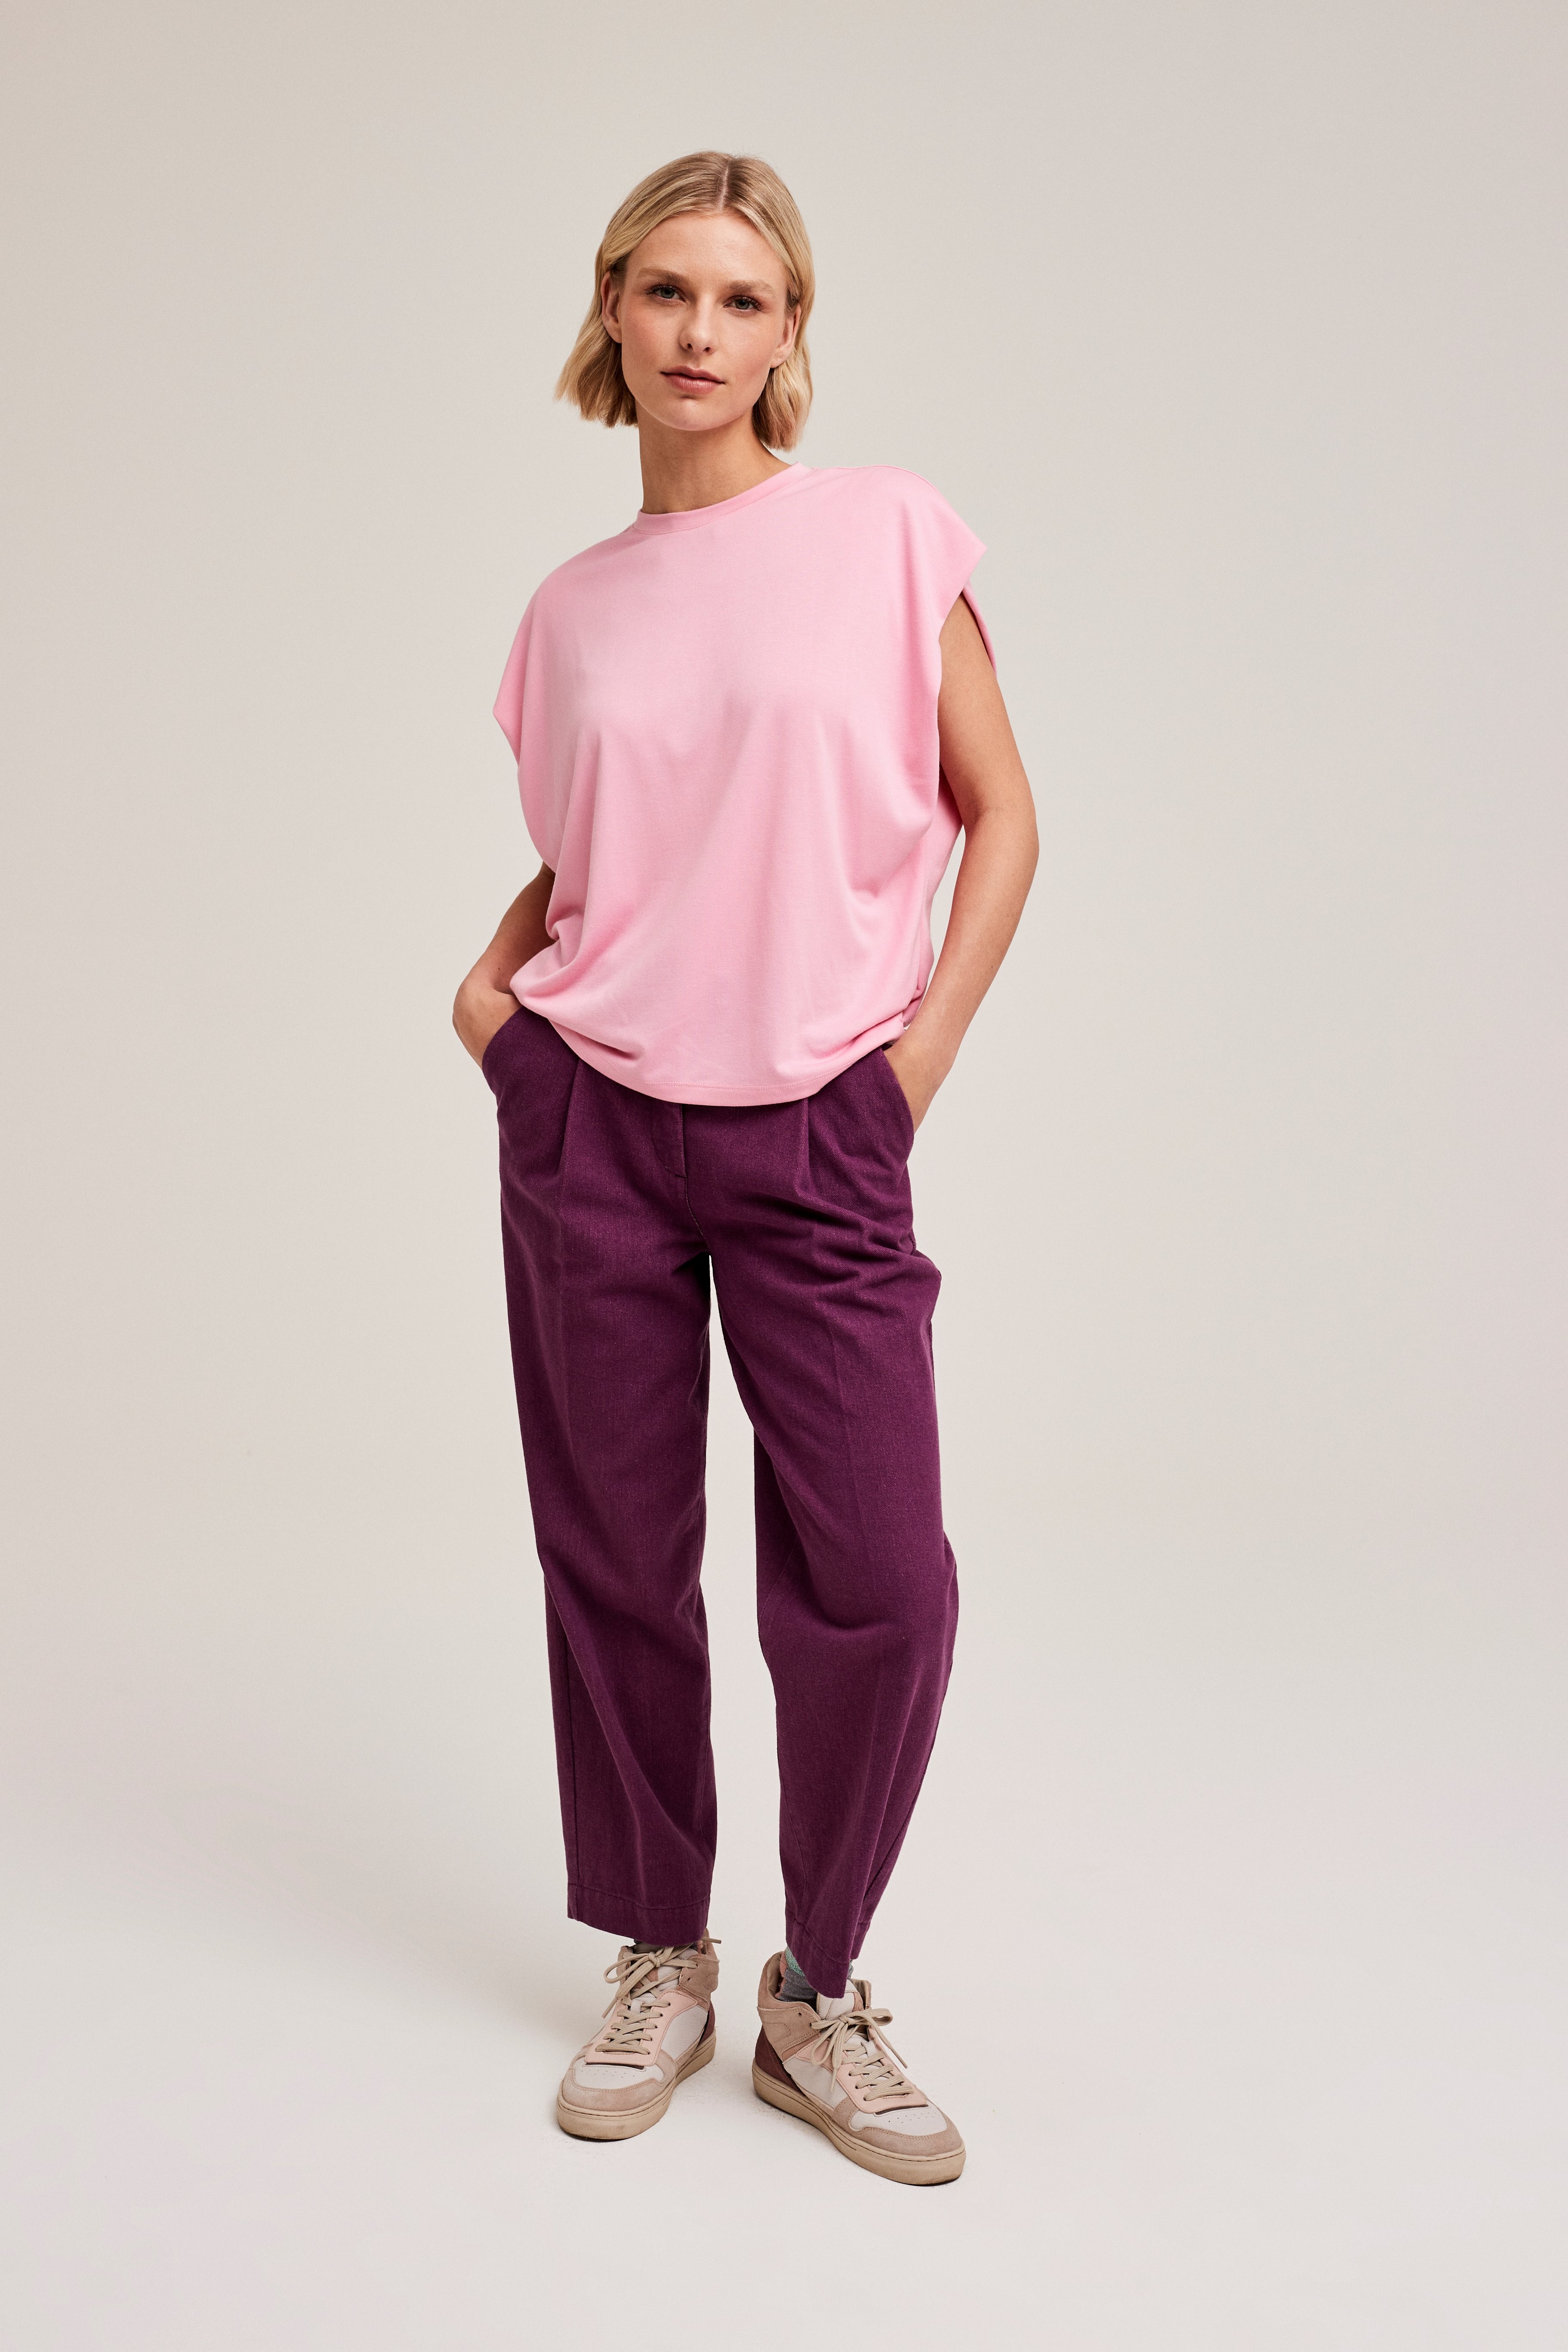 CKS Dames - PLAMINA - t-shirt short sleeves - light pink